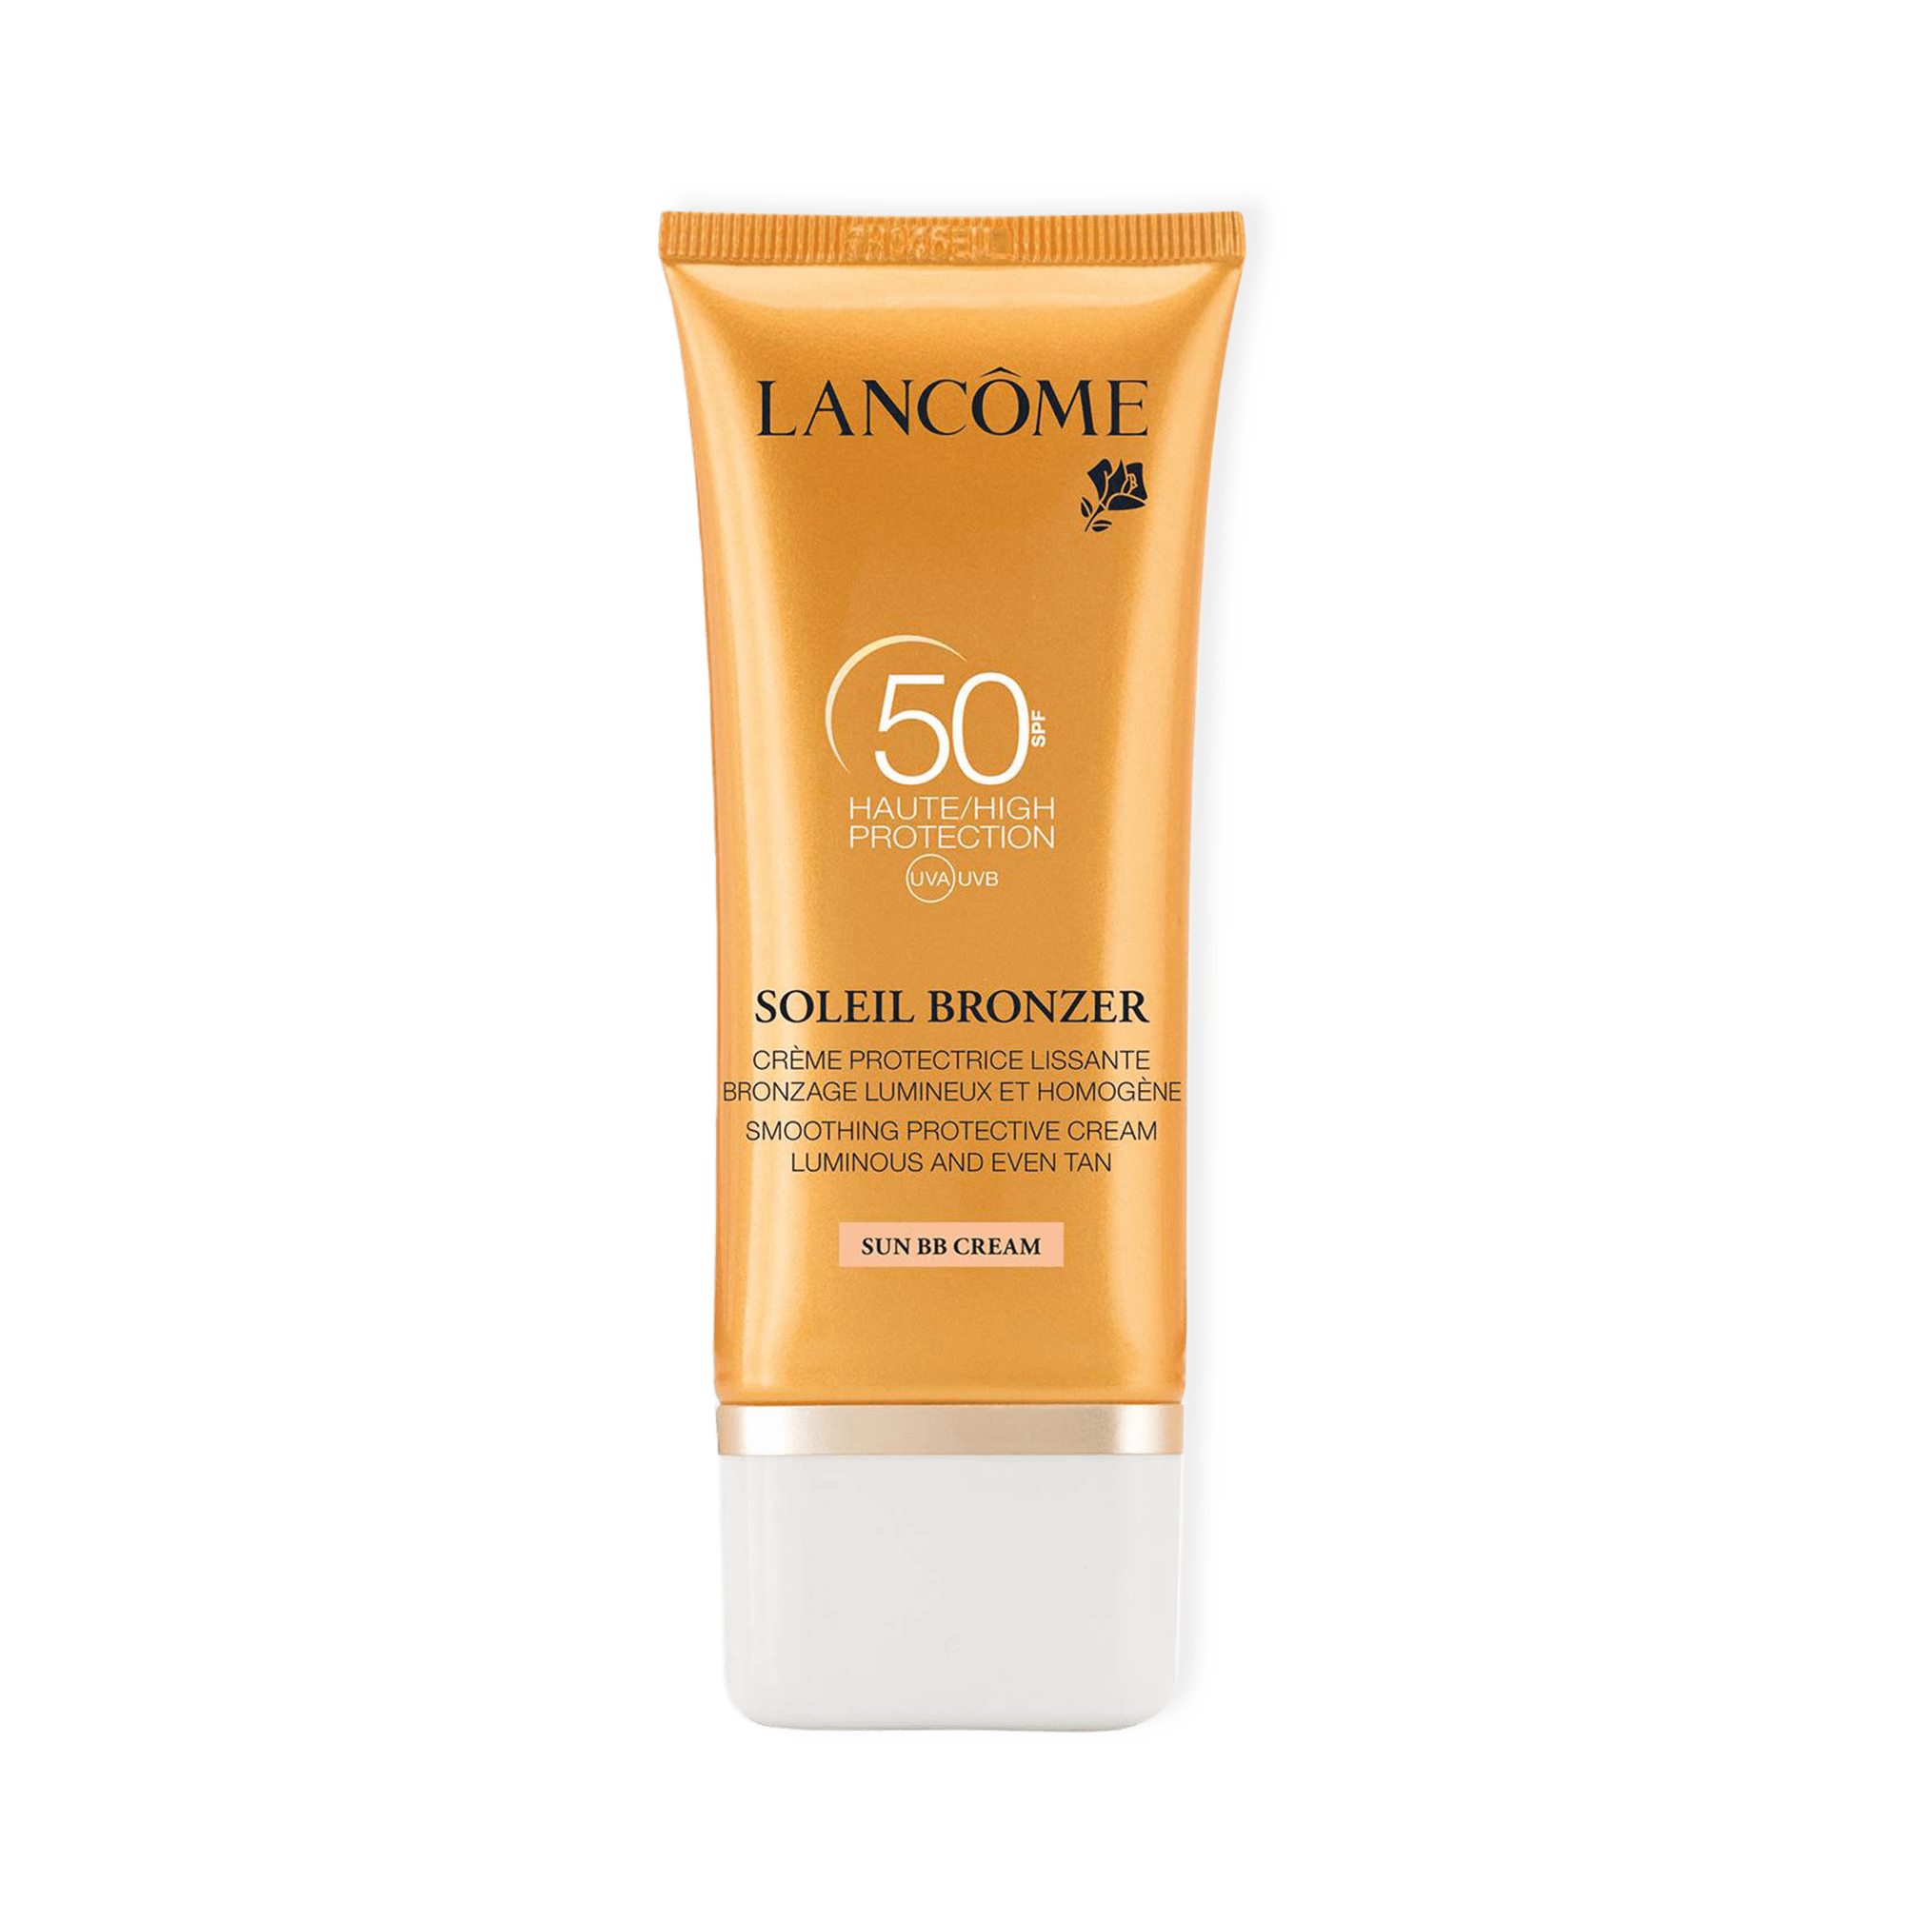 Soleil Bronzer Sun BB Cream, SPF 50 från Lancôme